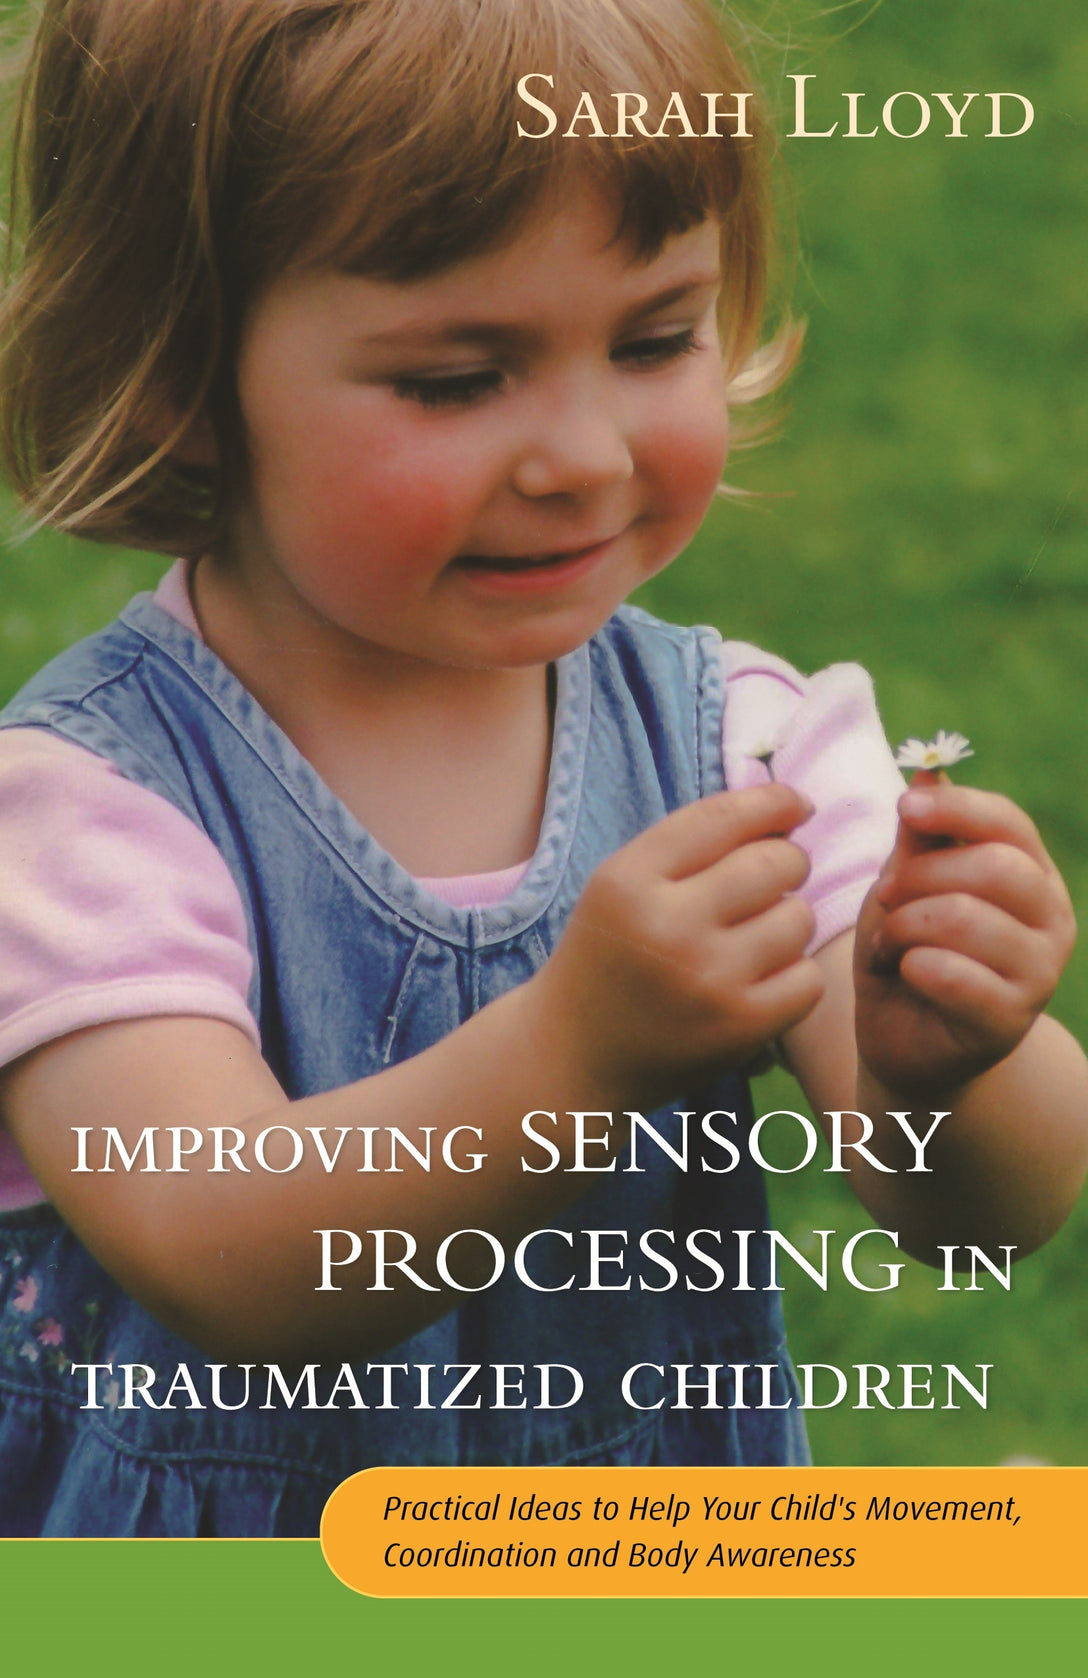 Improving Sensory Processing in Traumatized Children by Sarah Lloyd